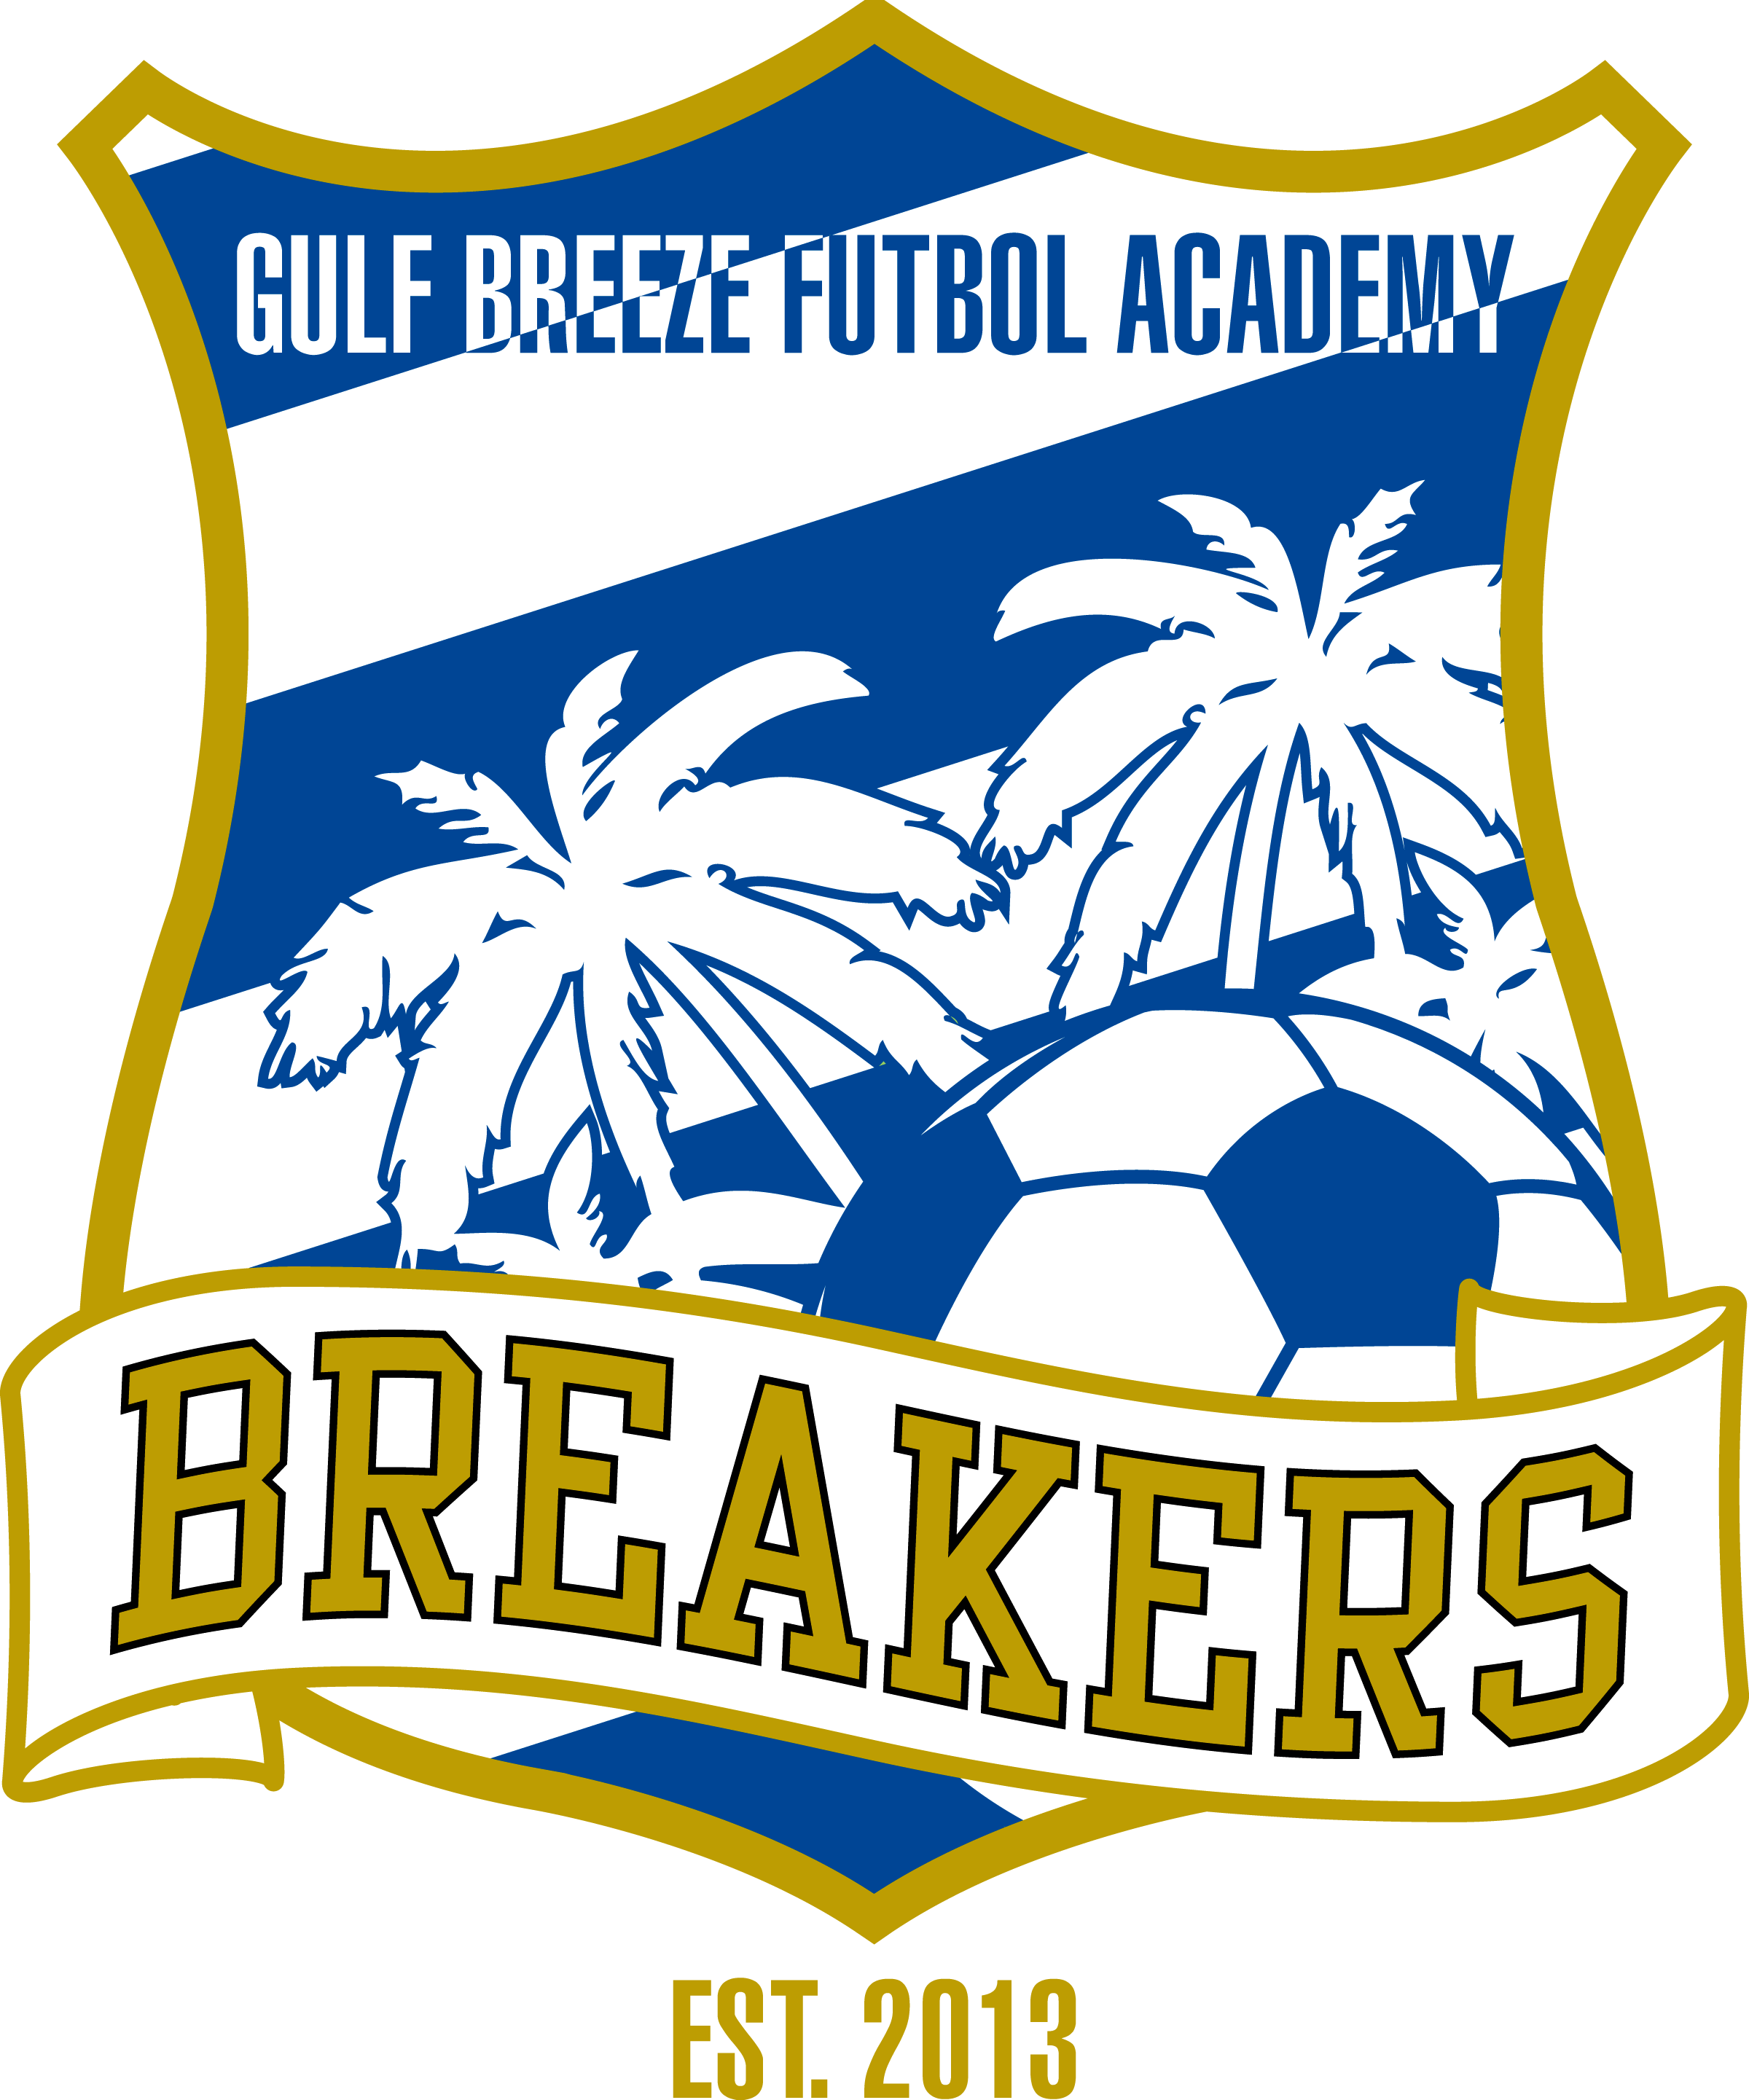 Gulf Breeze Futbol Academy team badge